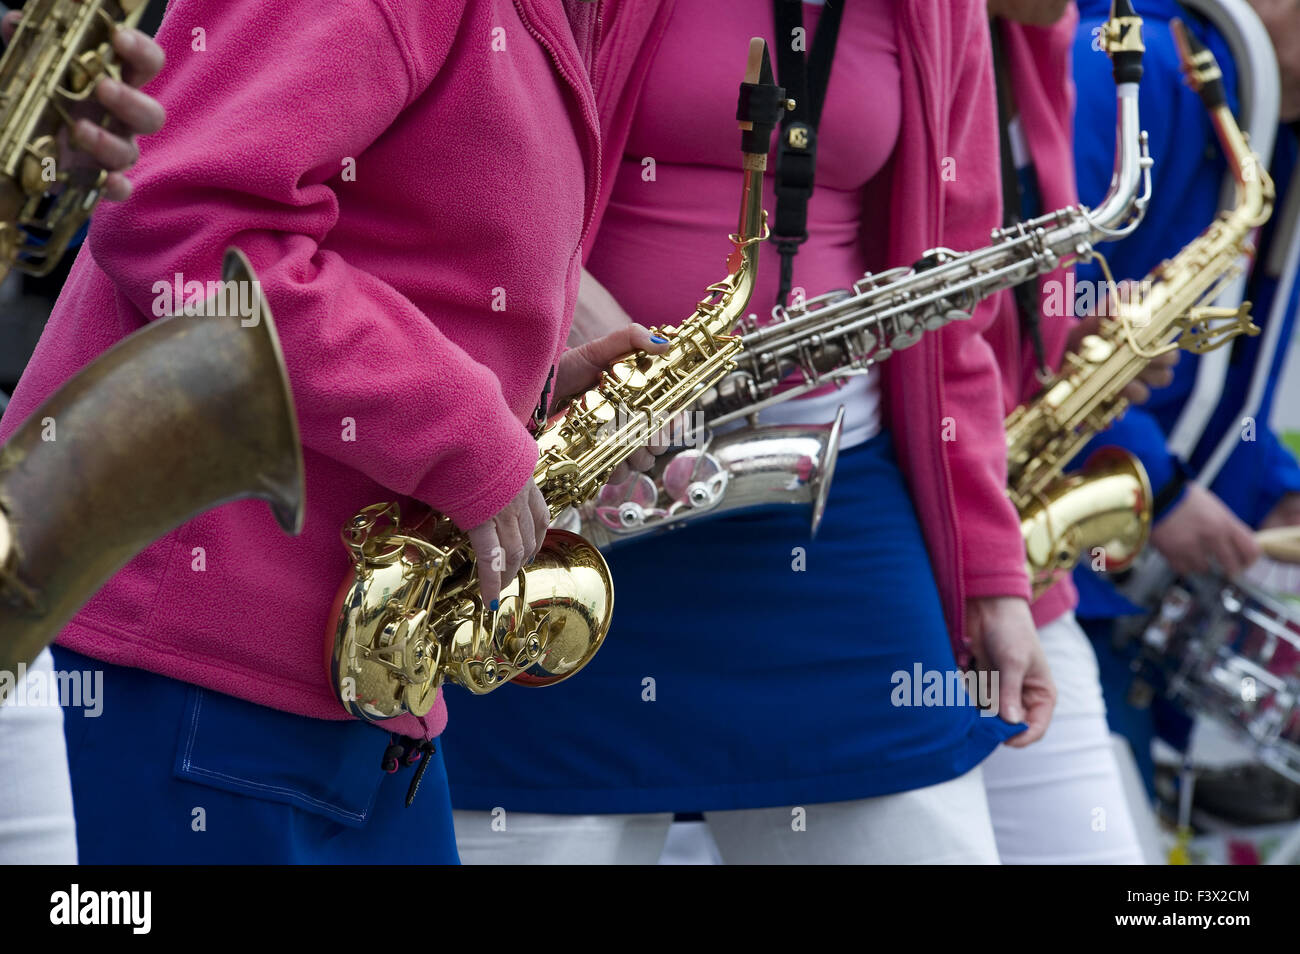 saxophone-stock-photo-alamy